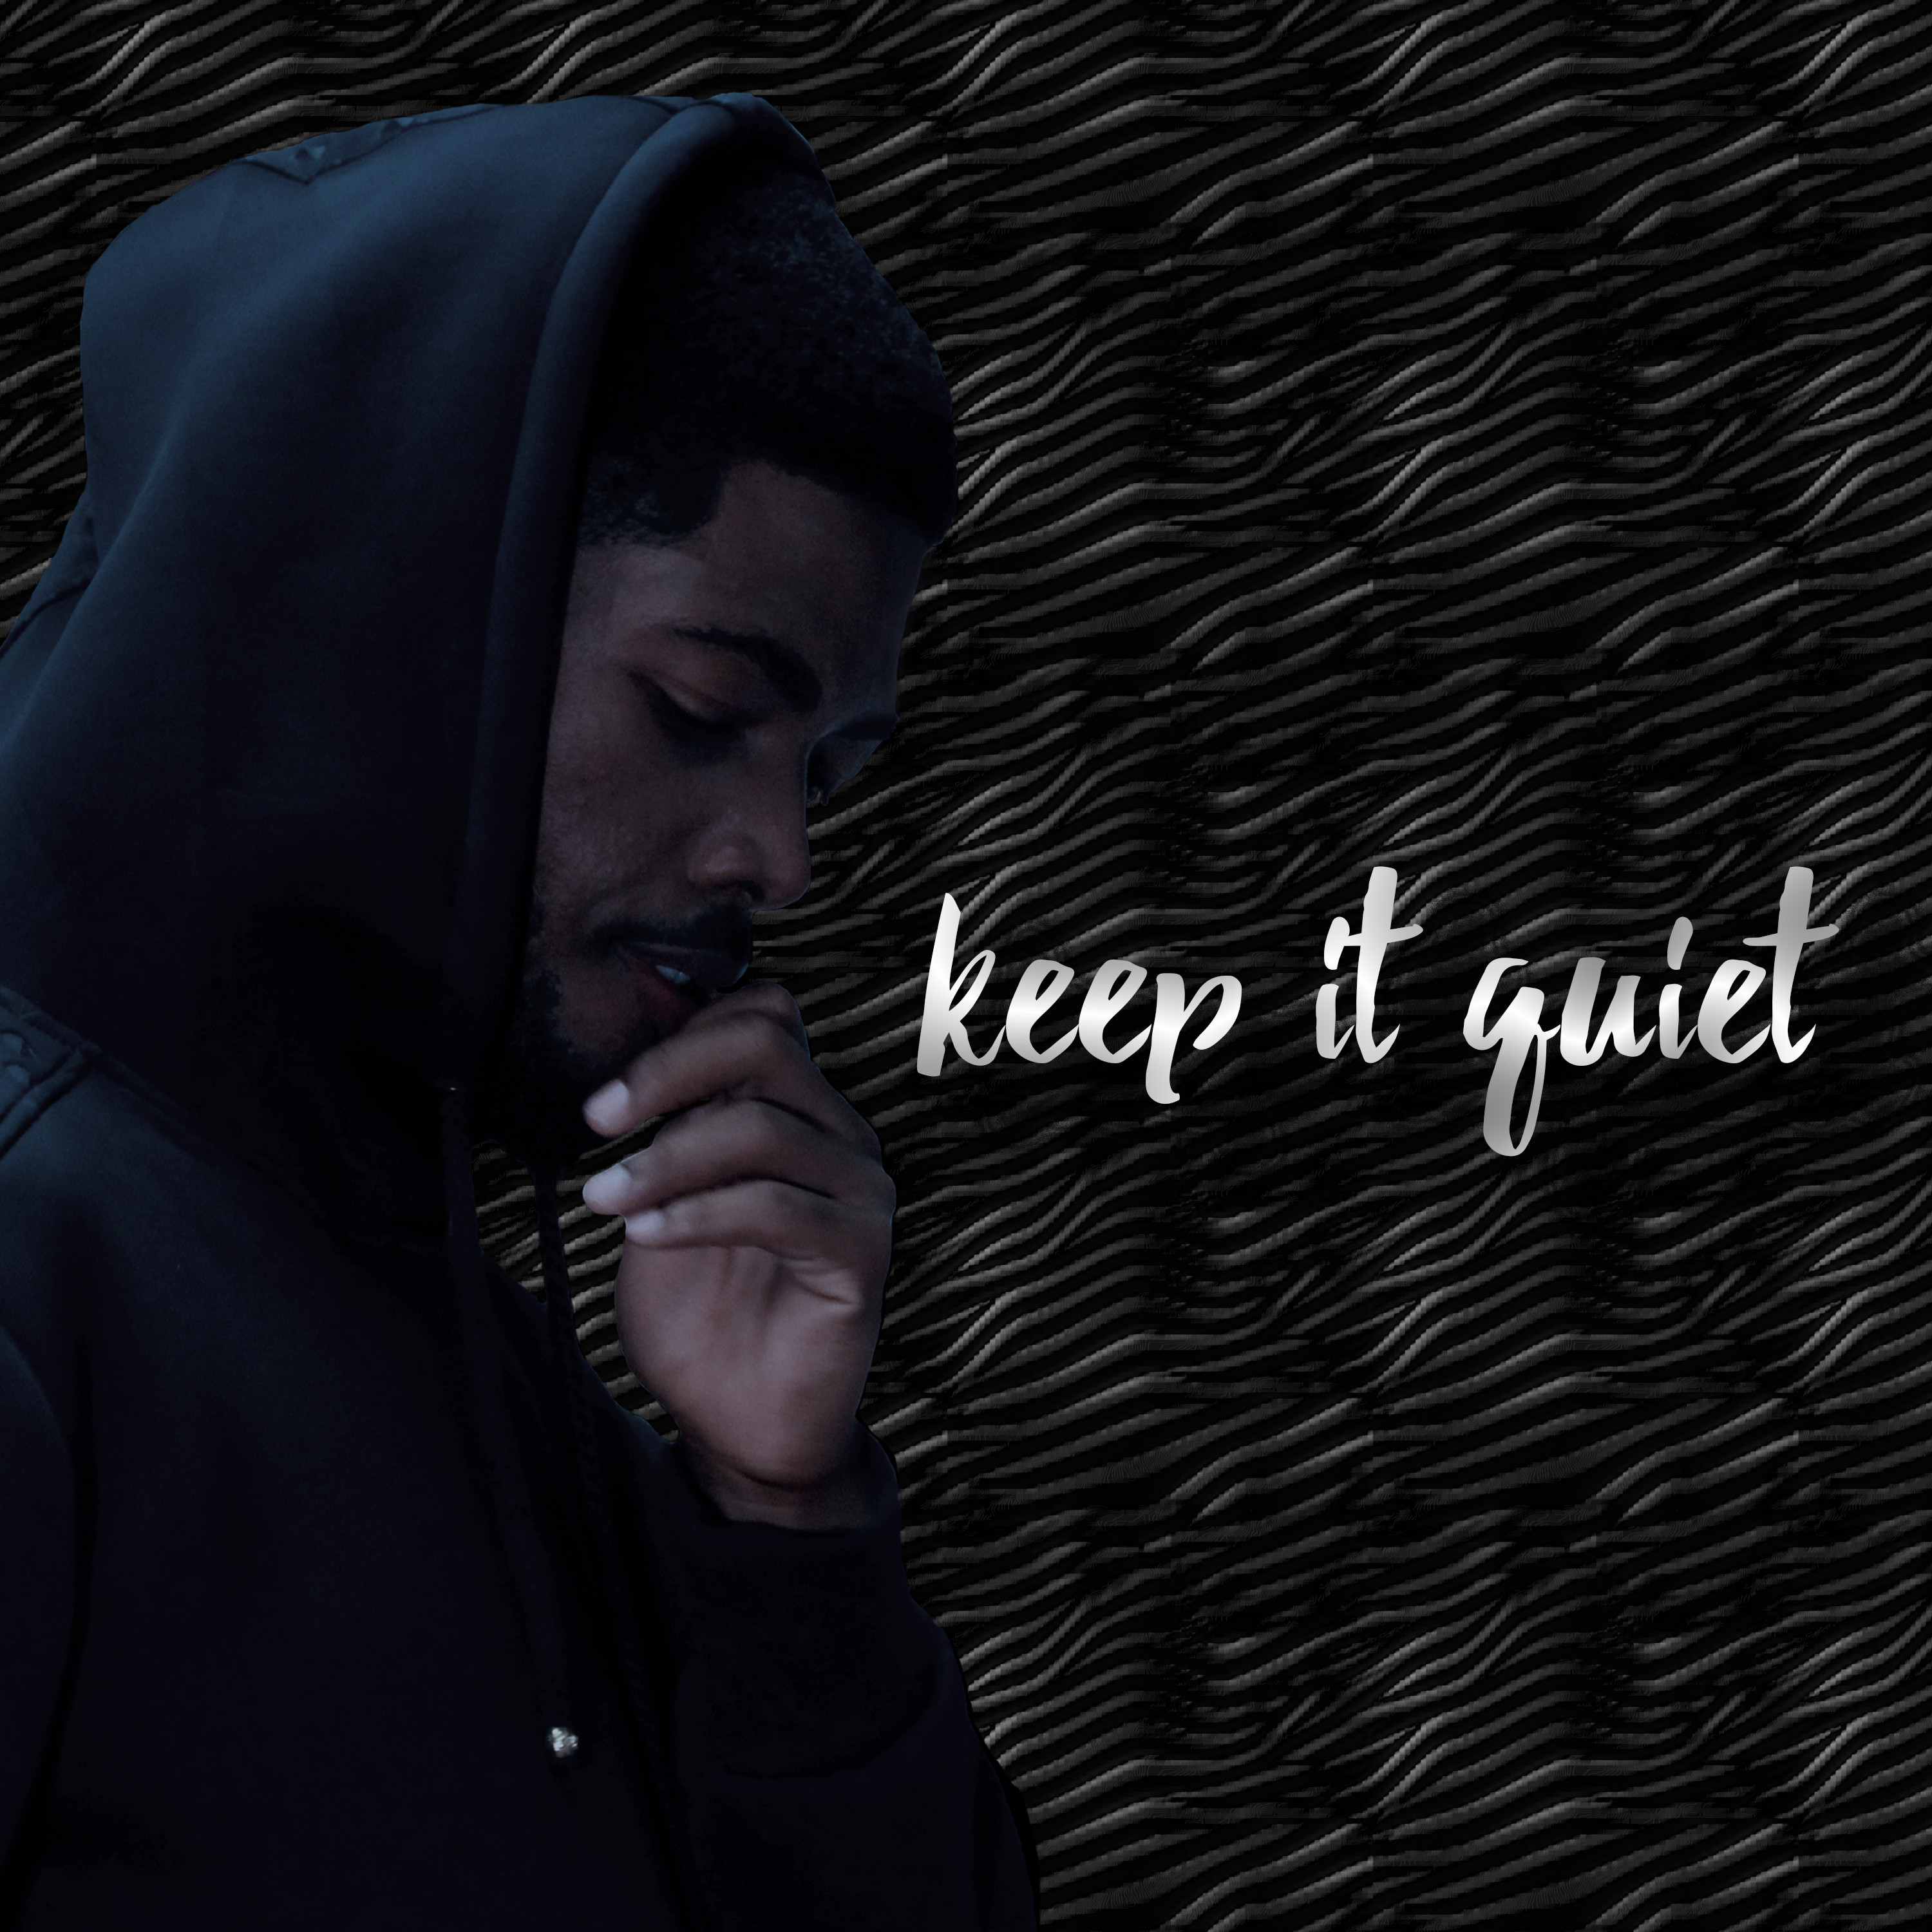 Keep It Quiet